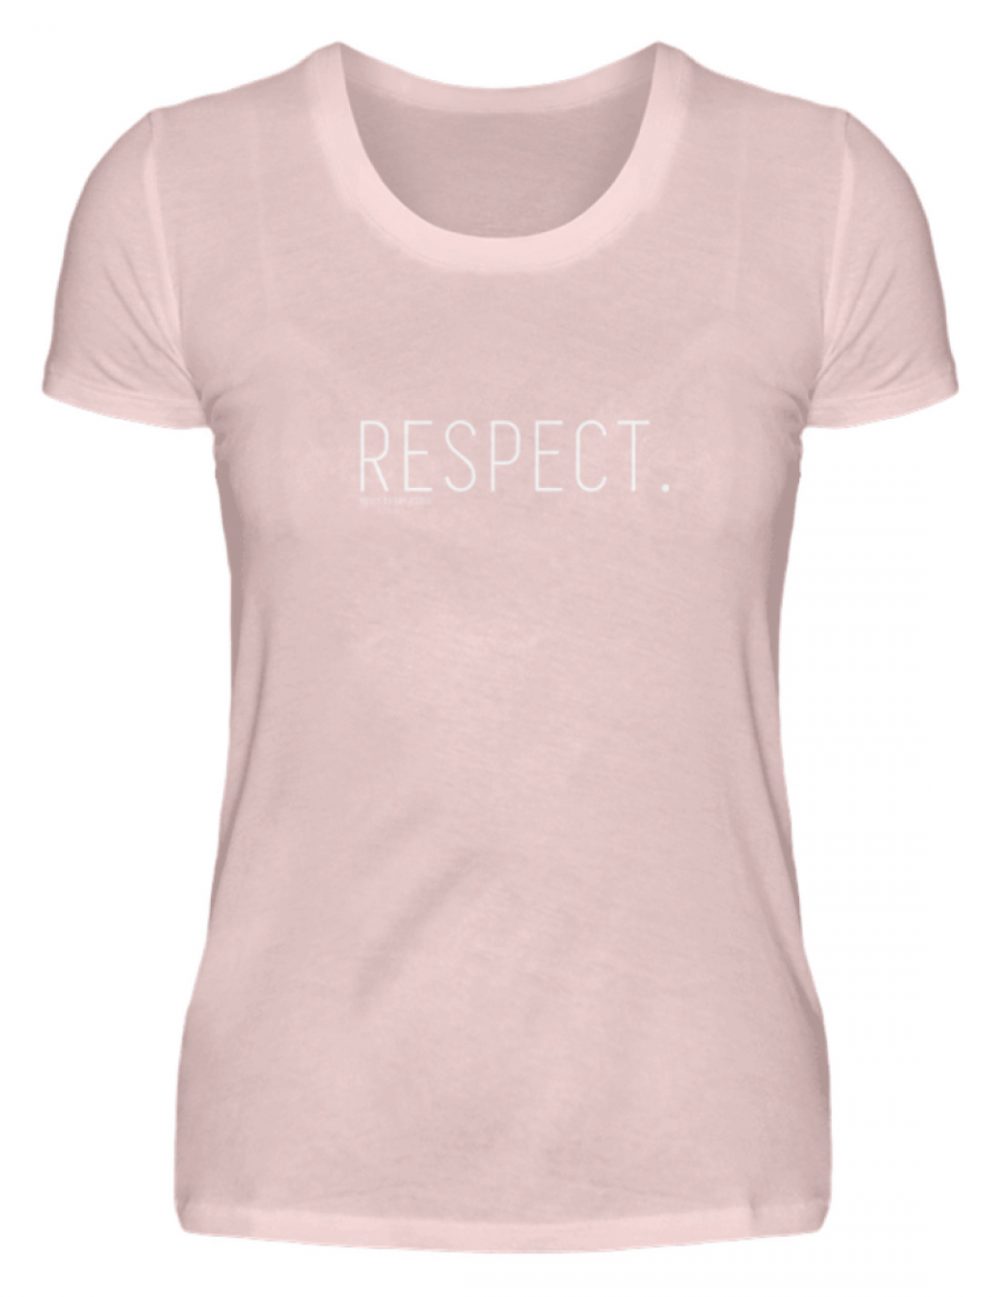 RESPECT. - Damen Premiumshirt-5949